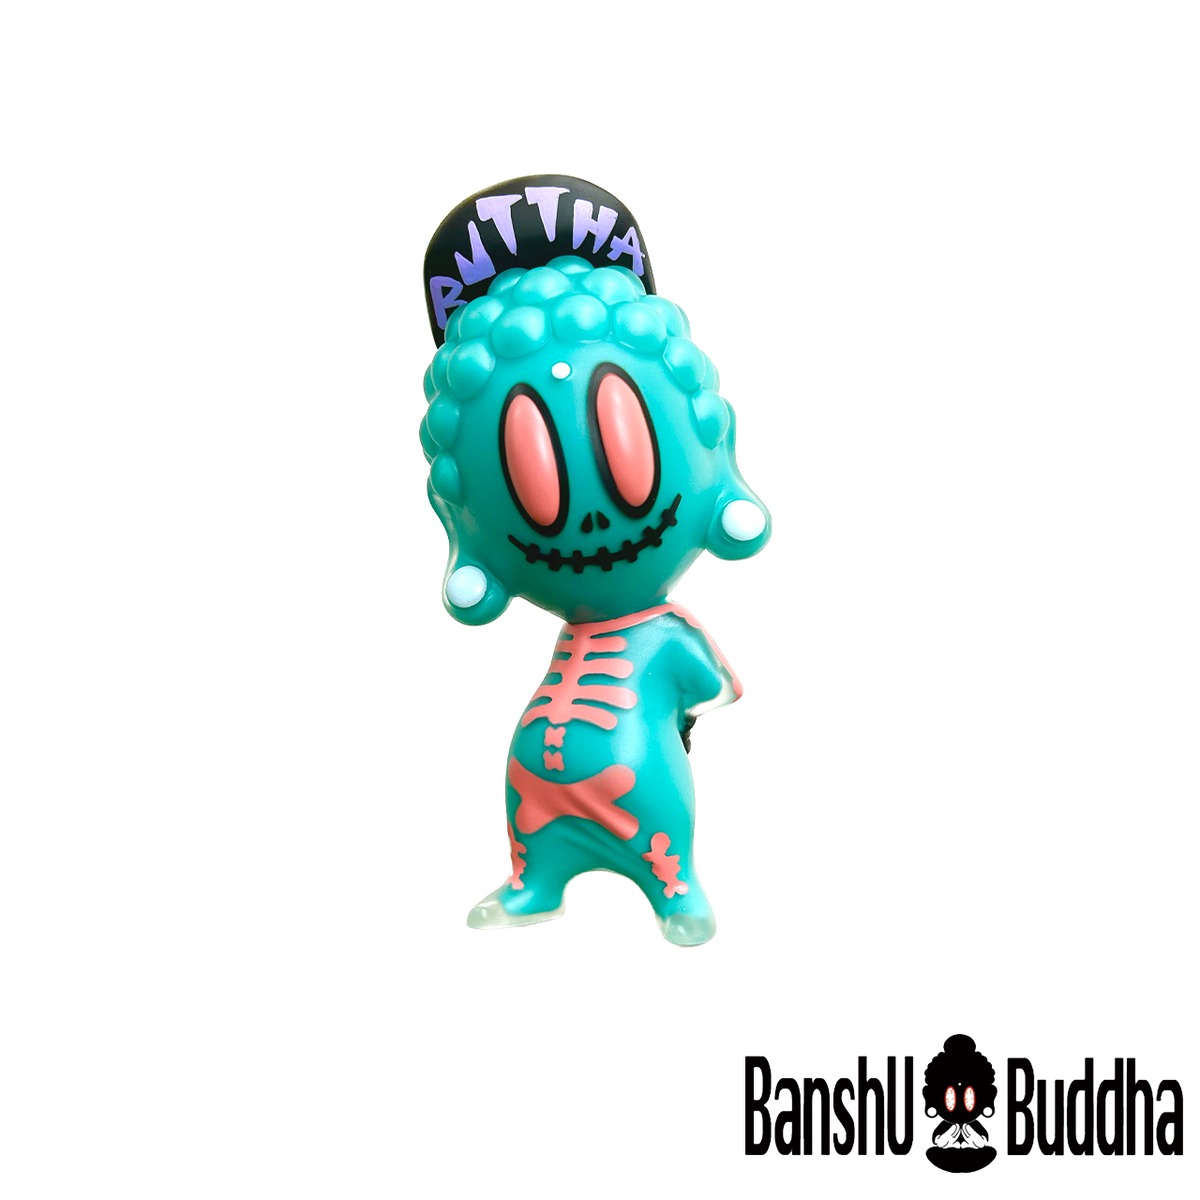 Banshu Buddha ブッタくん スケルトン#25